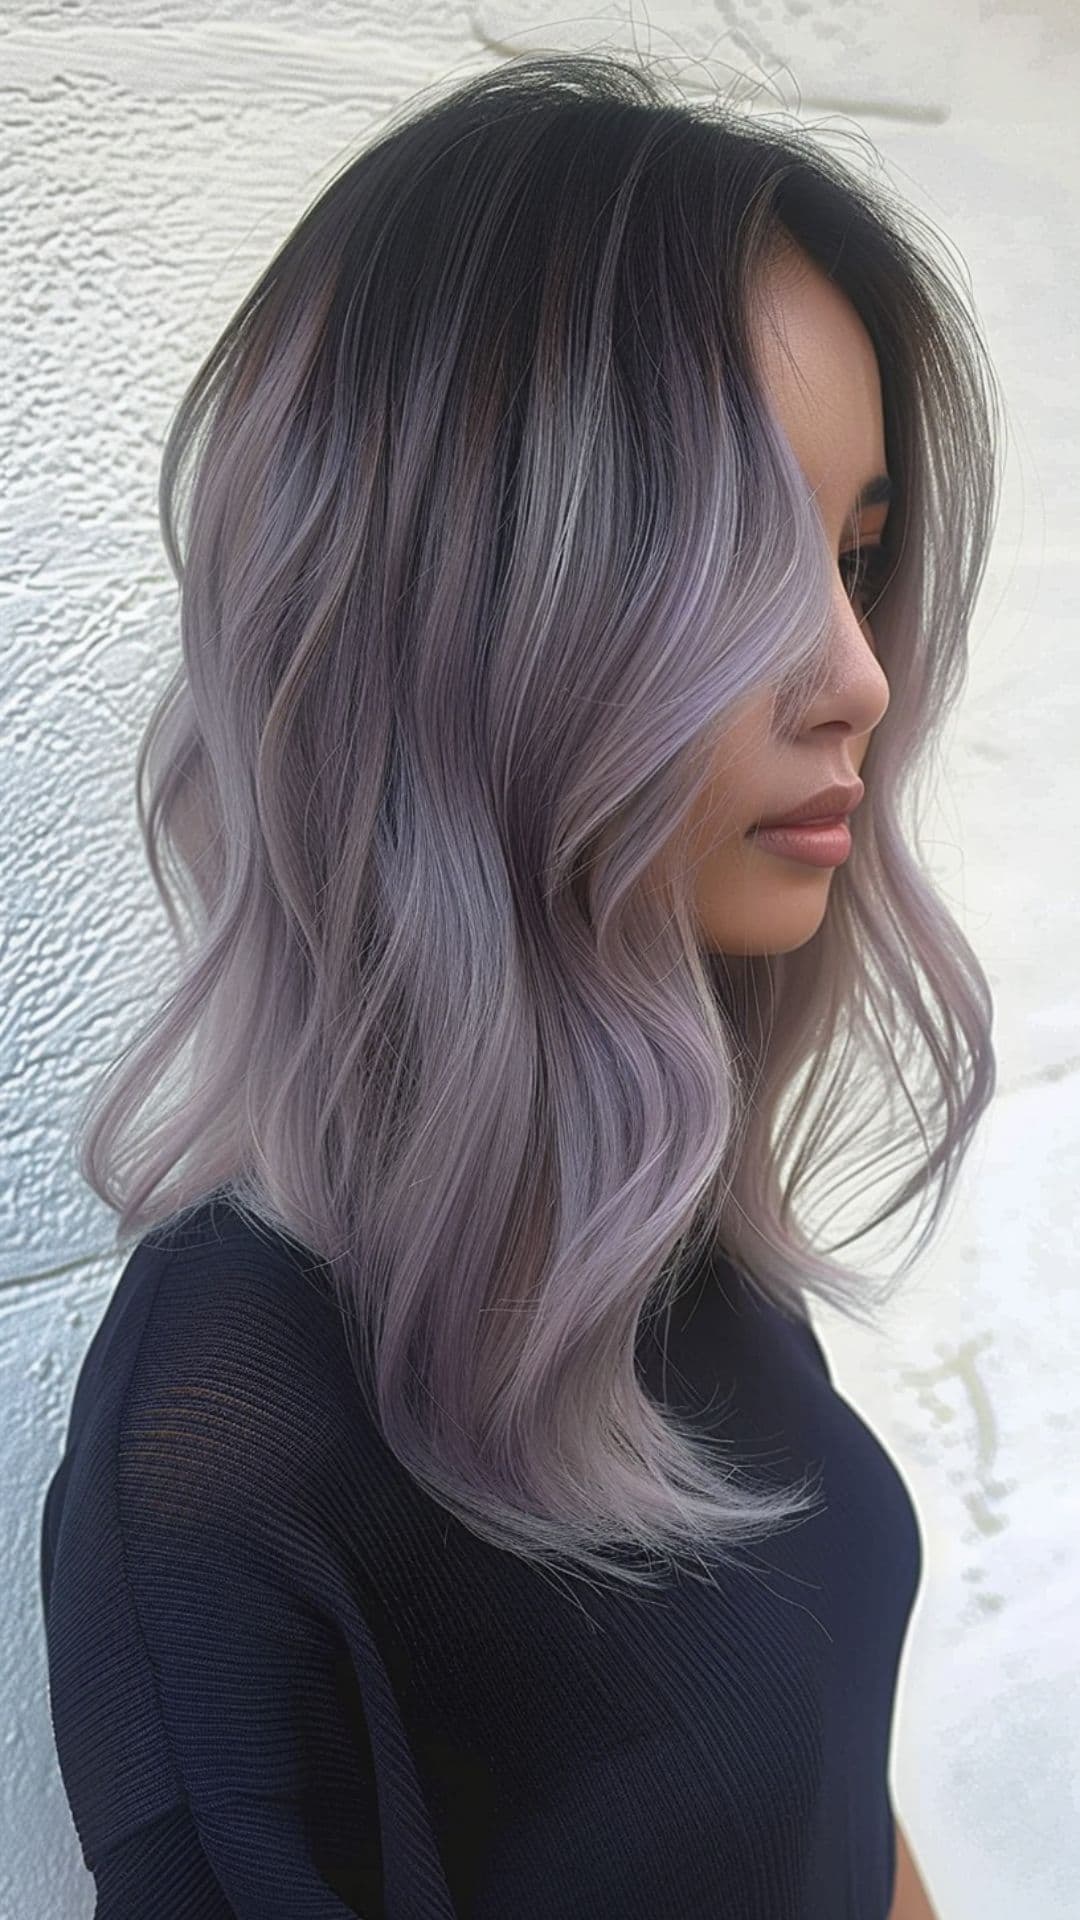 A woman modelling a gray lilac hair.